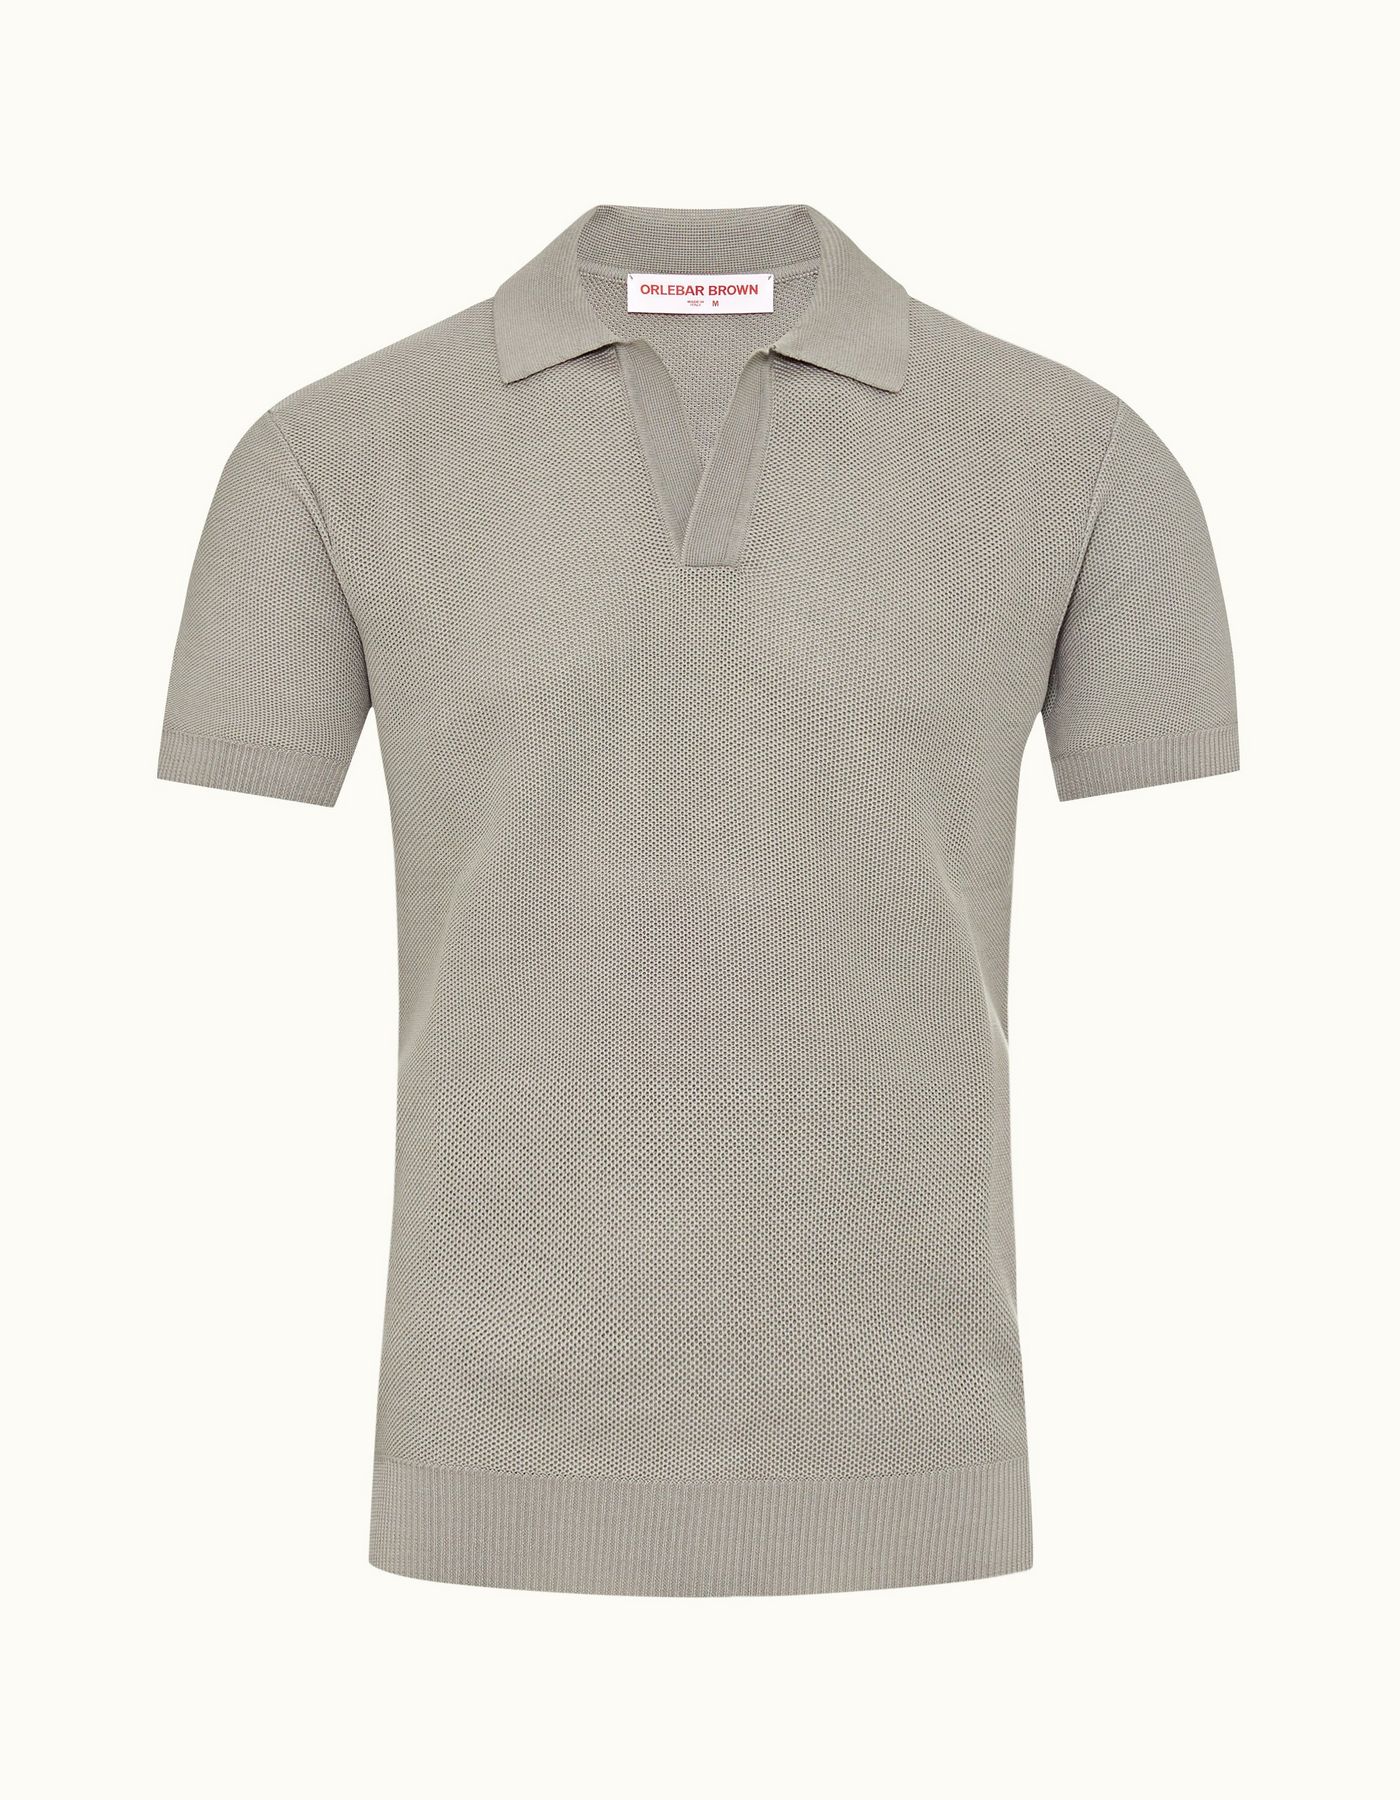 Horton Pique - Mens Cinder Tailored Fit Pique Stitch Mercerised Cotton Polo Shirt